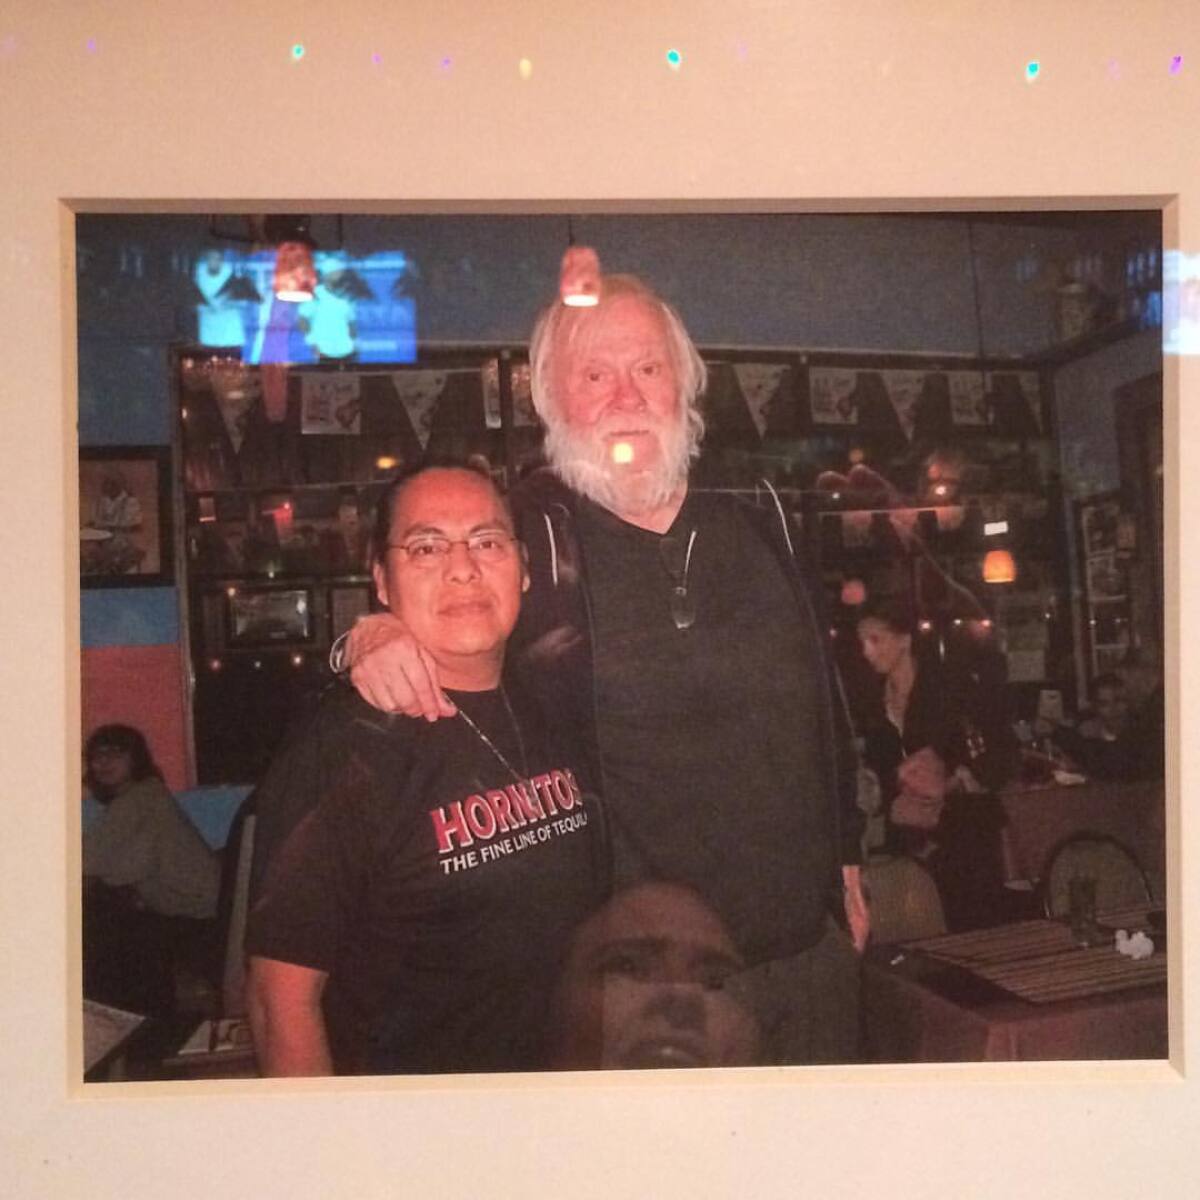 A photo of John Baldessari on the fame wall at El Texate Mexican restaurant in Santa Monica.